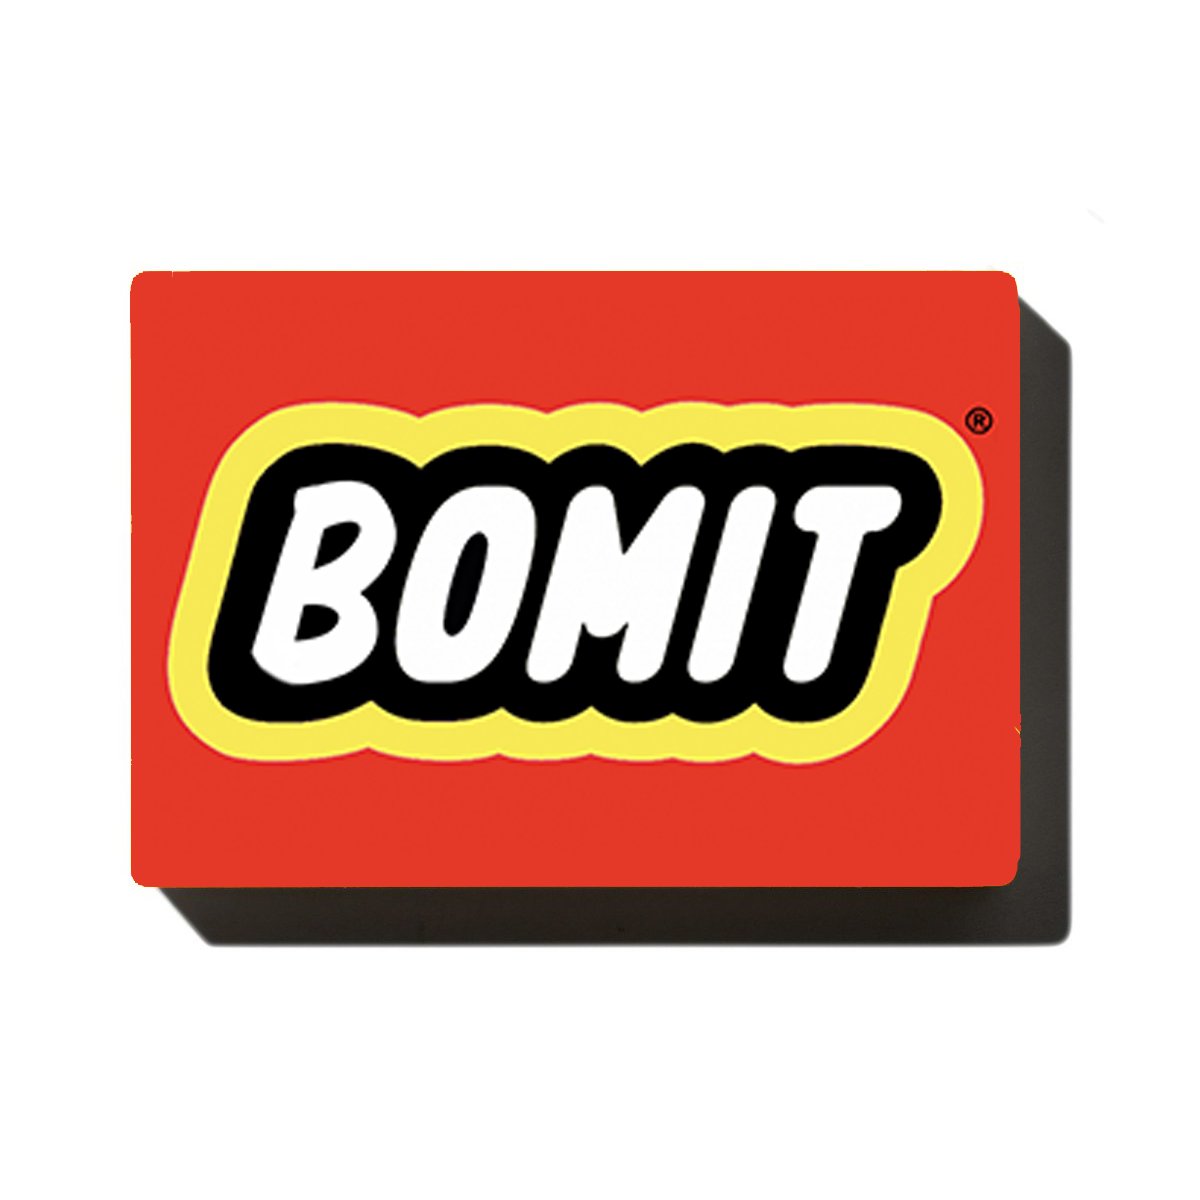 Image of Bomit "Lego"